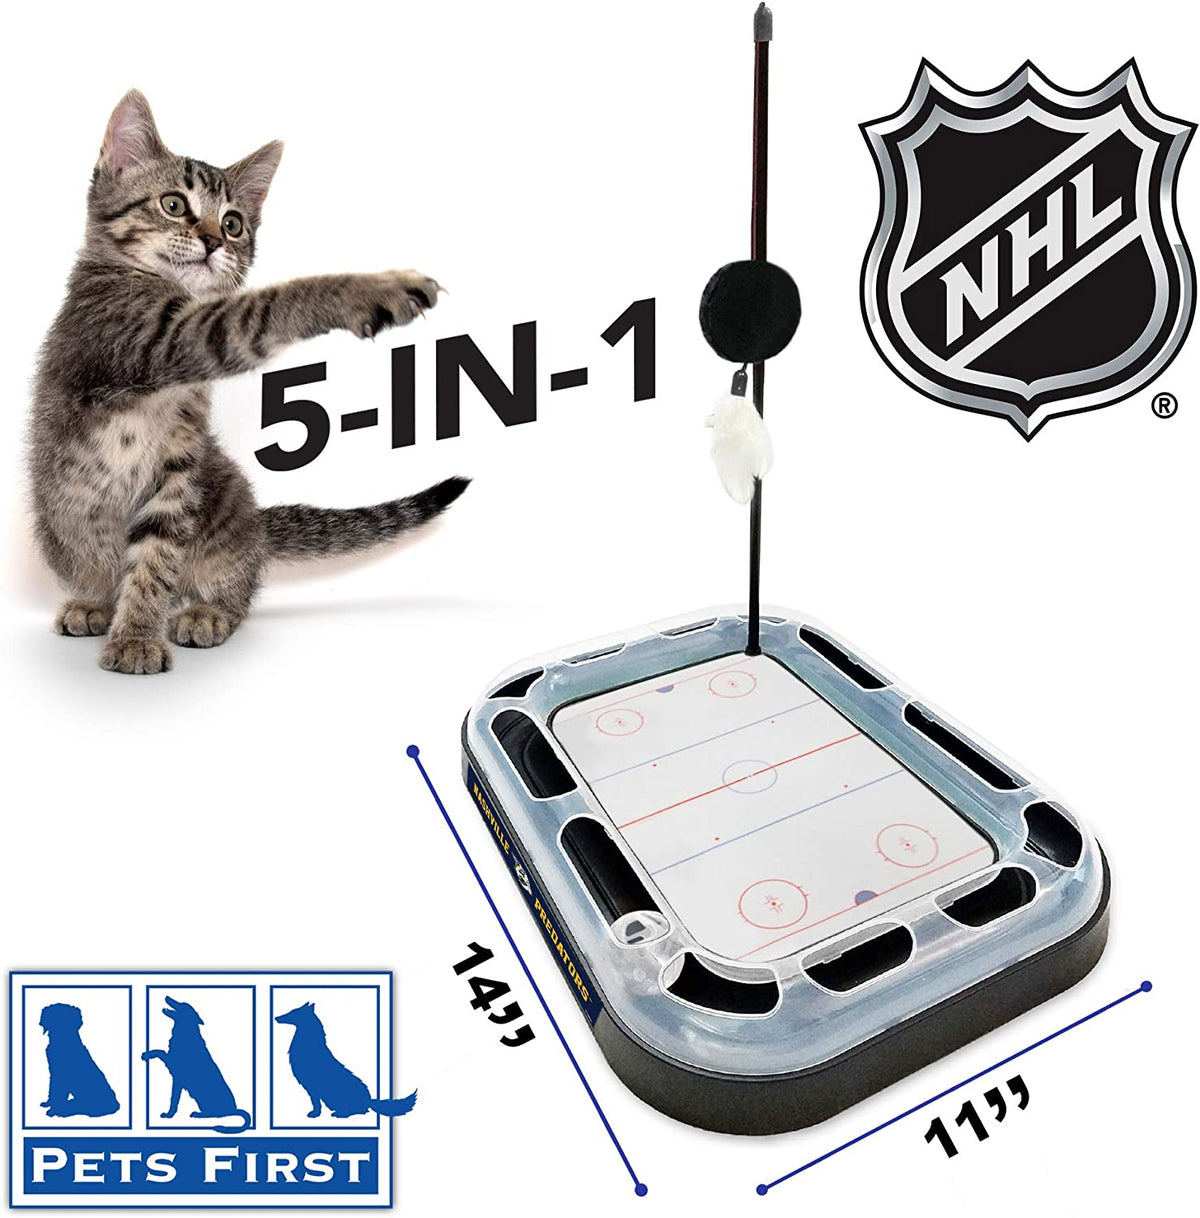 Nashville Predators Hockey Rink Cat Scratcher Toy